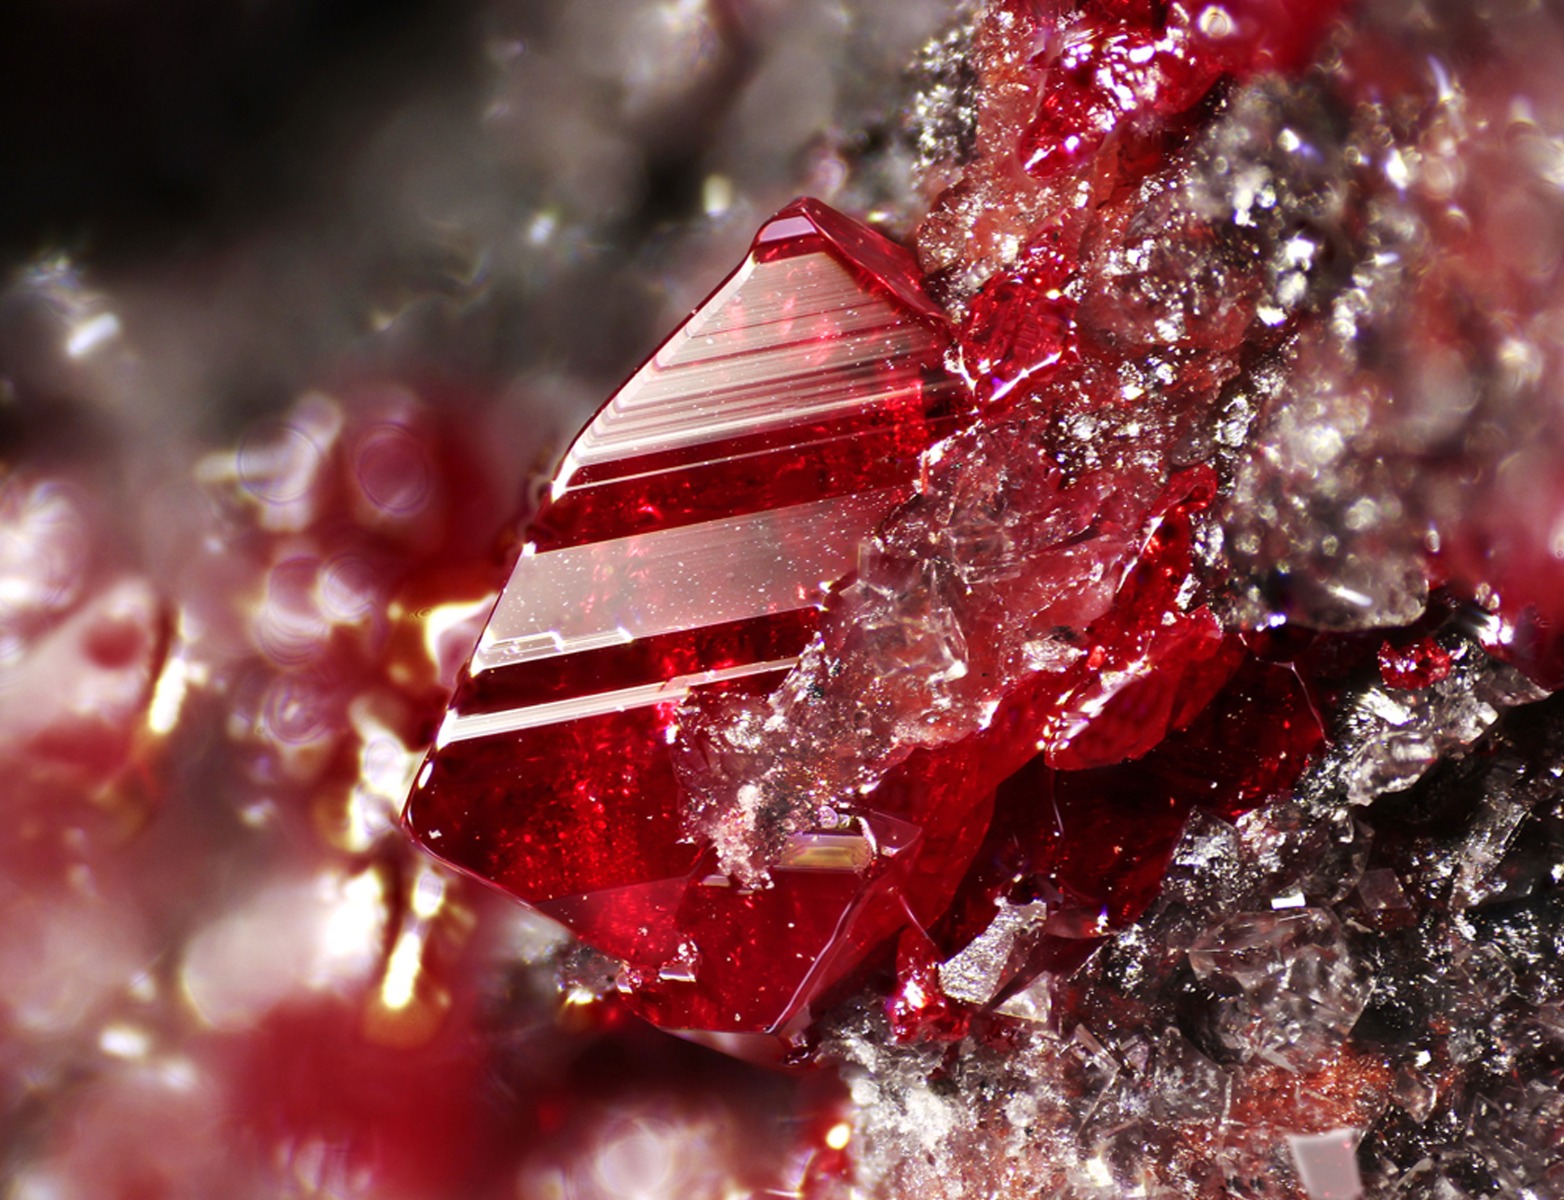 Cinnabar crystal with quartz, FOV 5 mm | Motic PlanApo 5X | Stacking